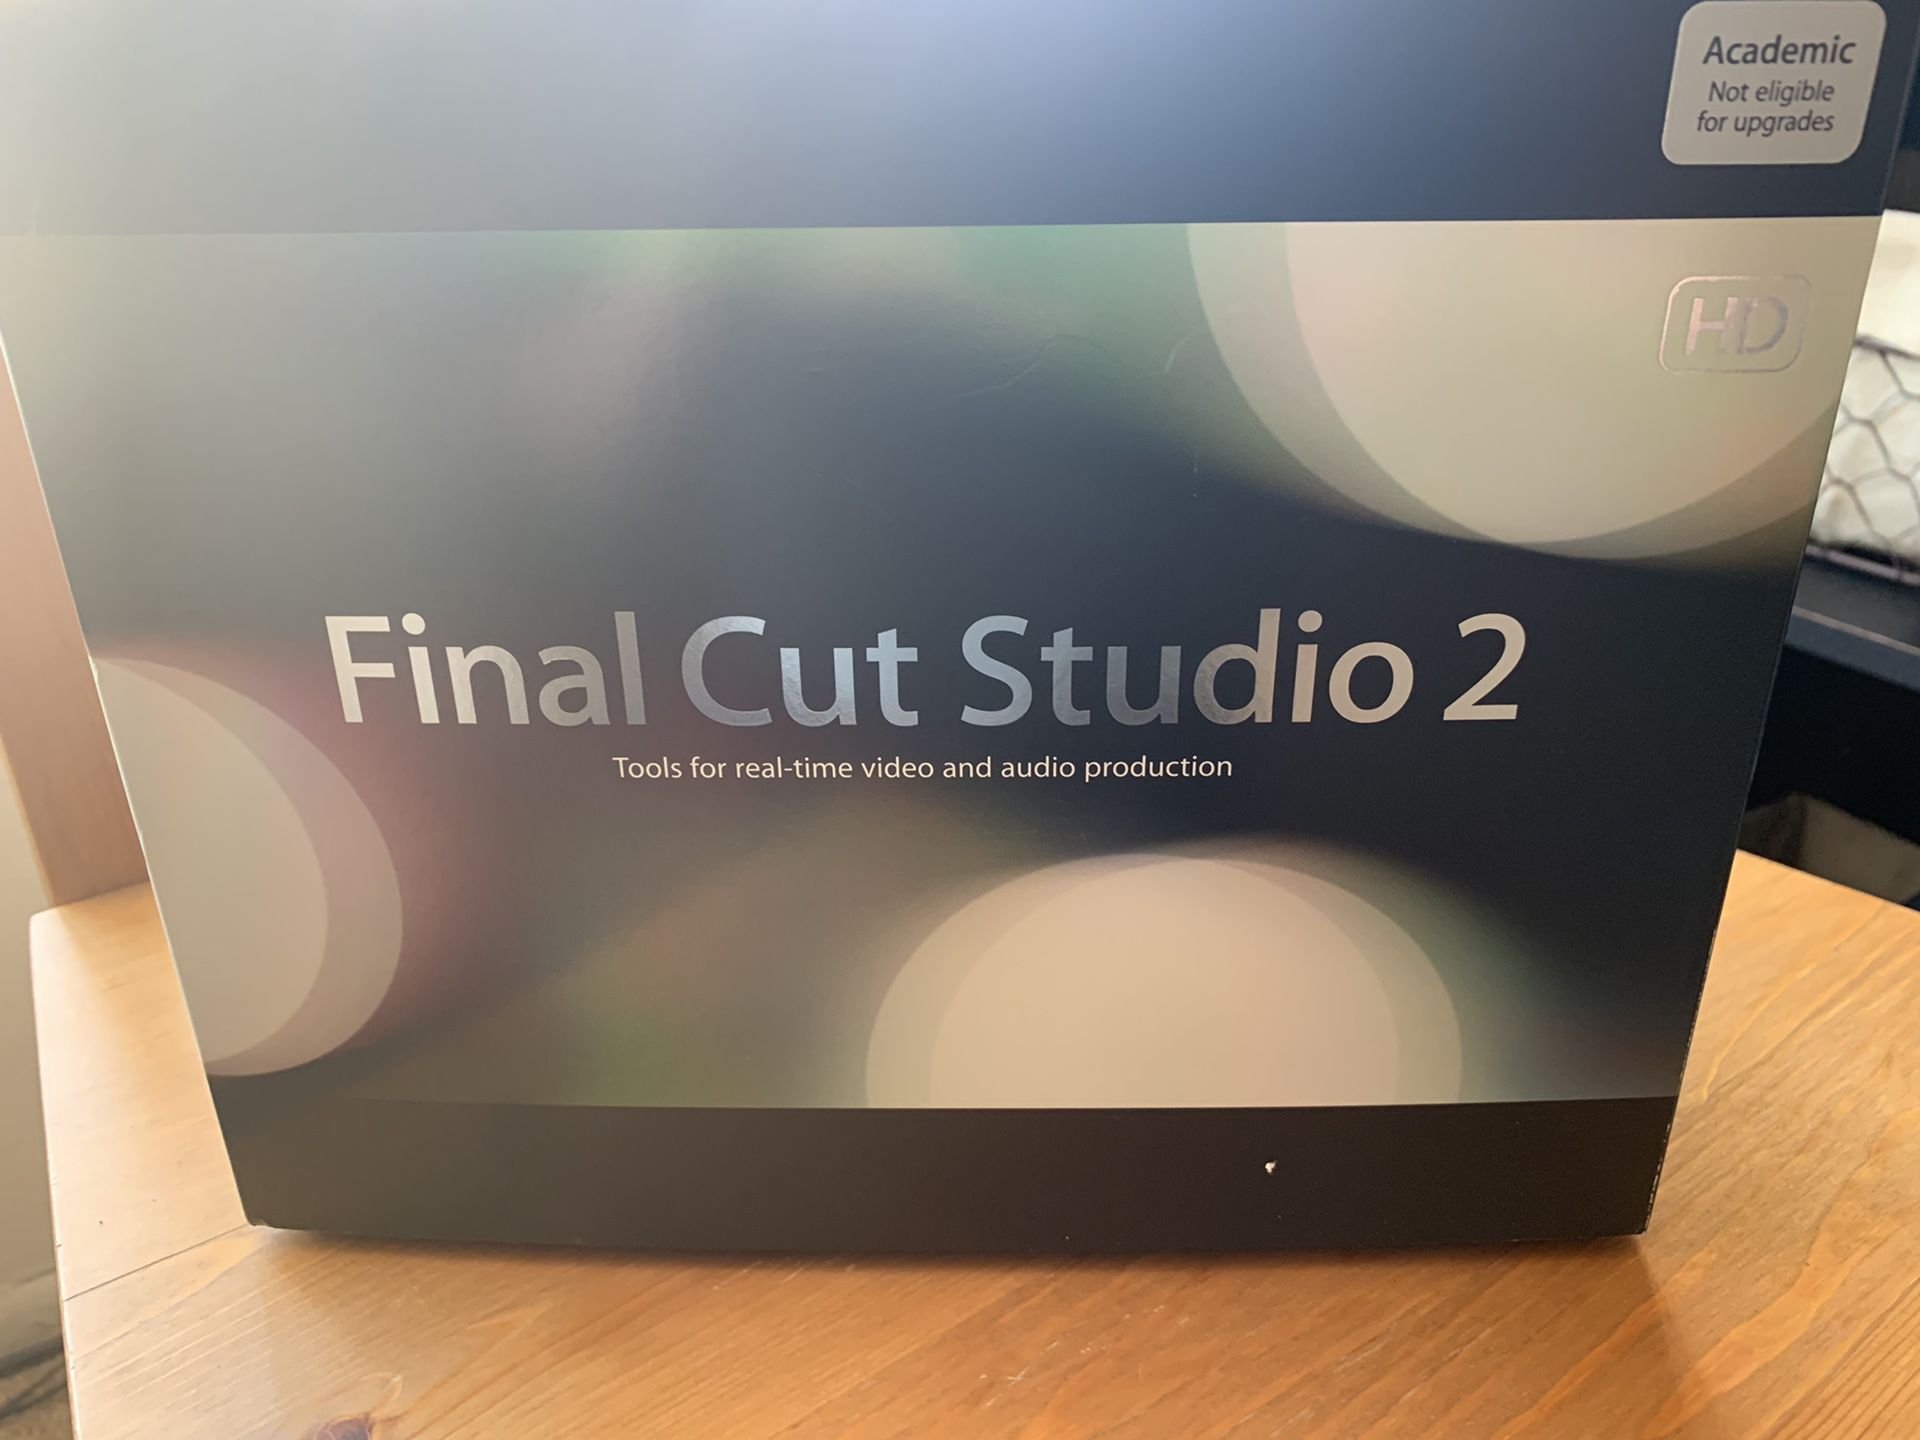 Final Cut Studio 2 - Academic